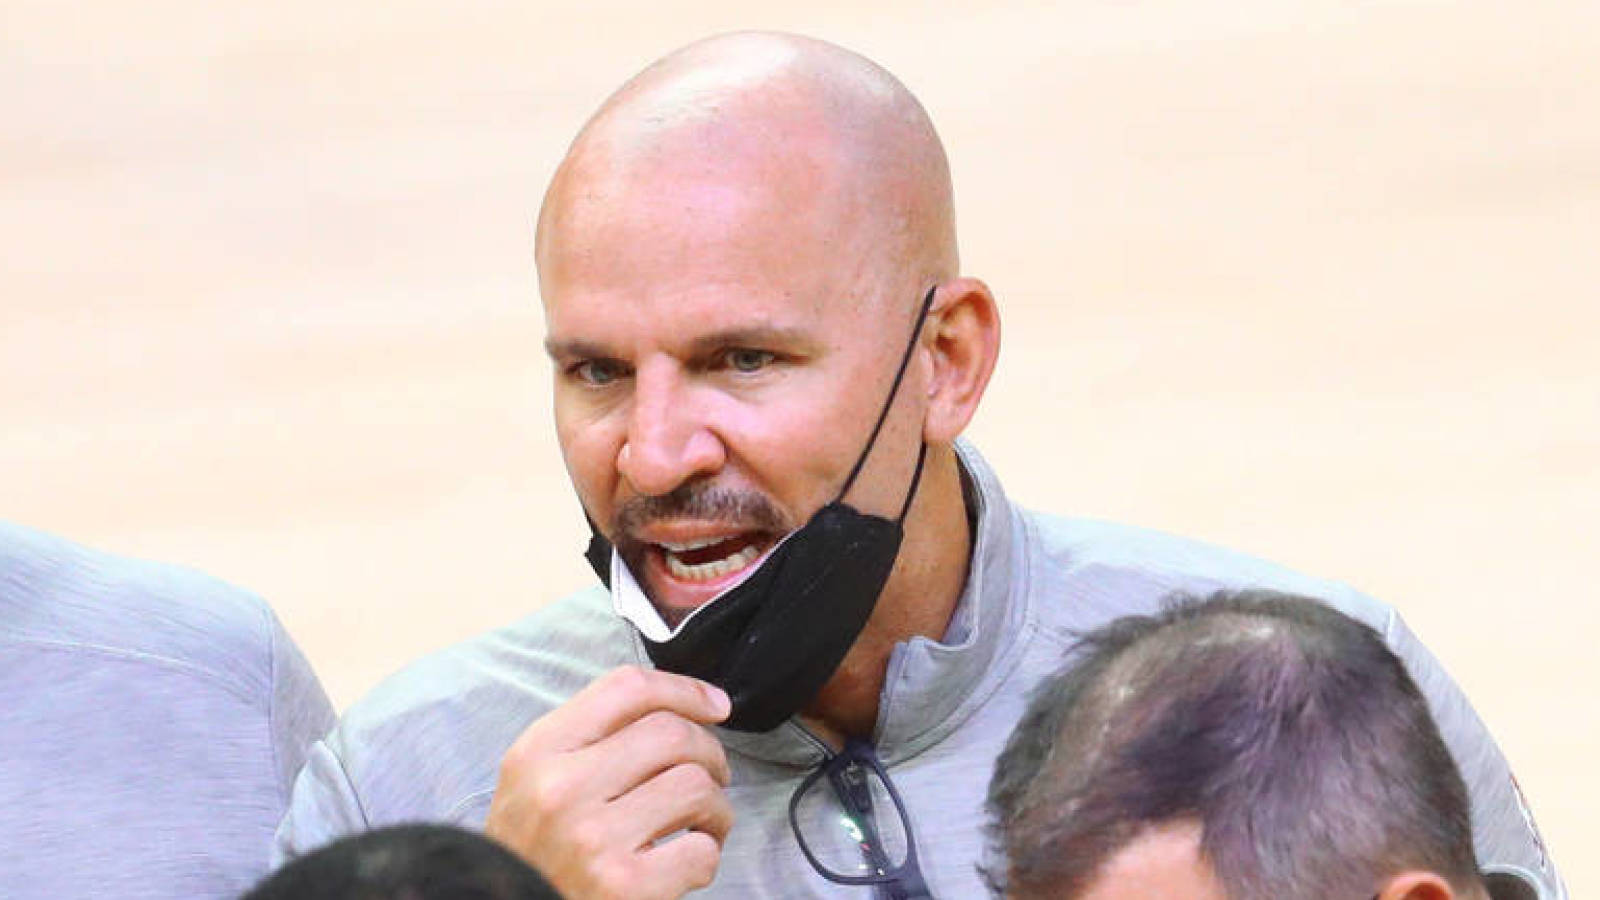 Nets hire Jason Kidd as head coach 